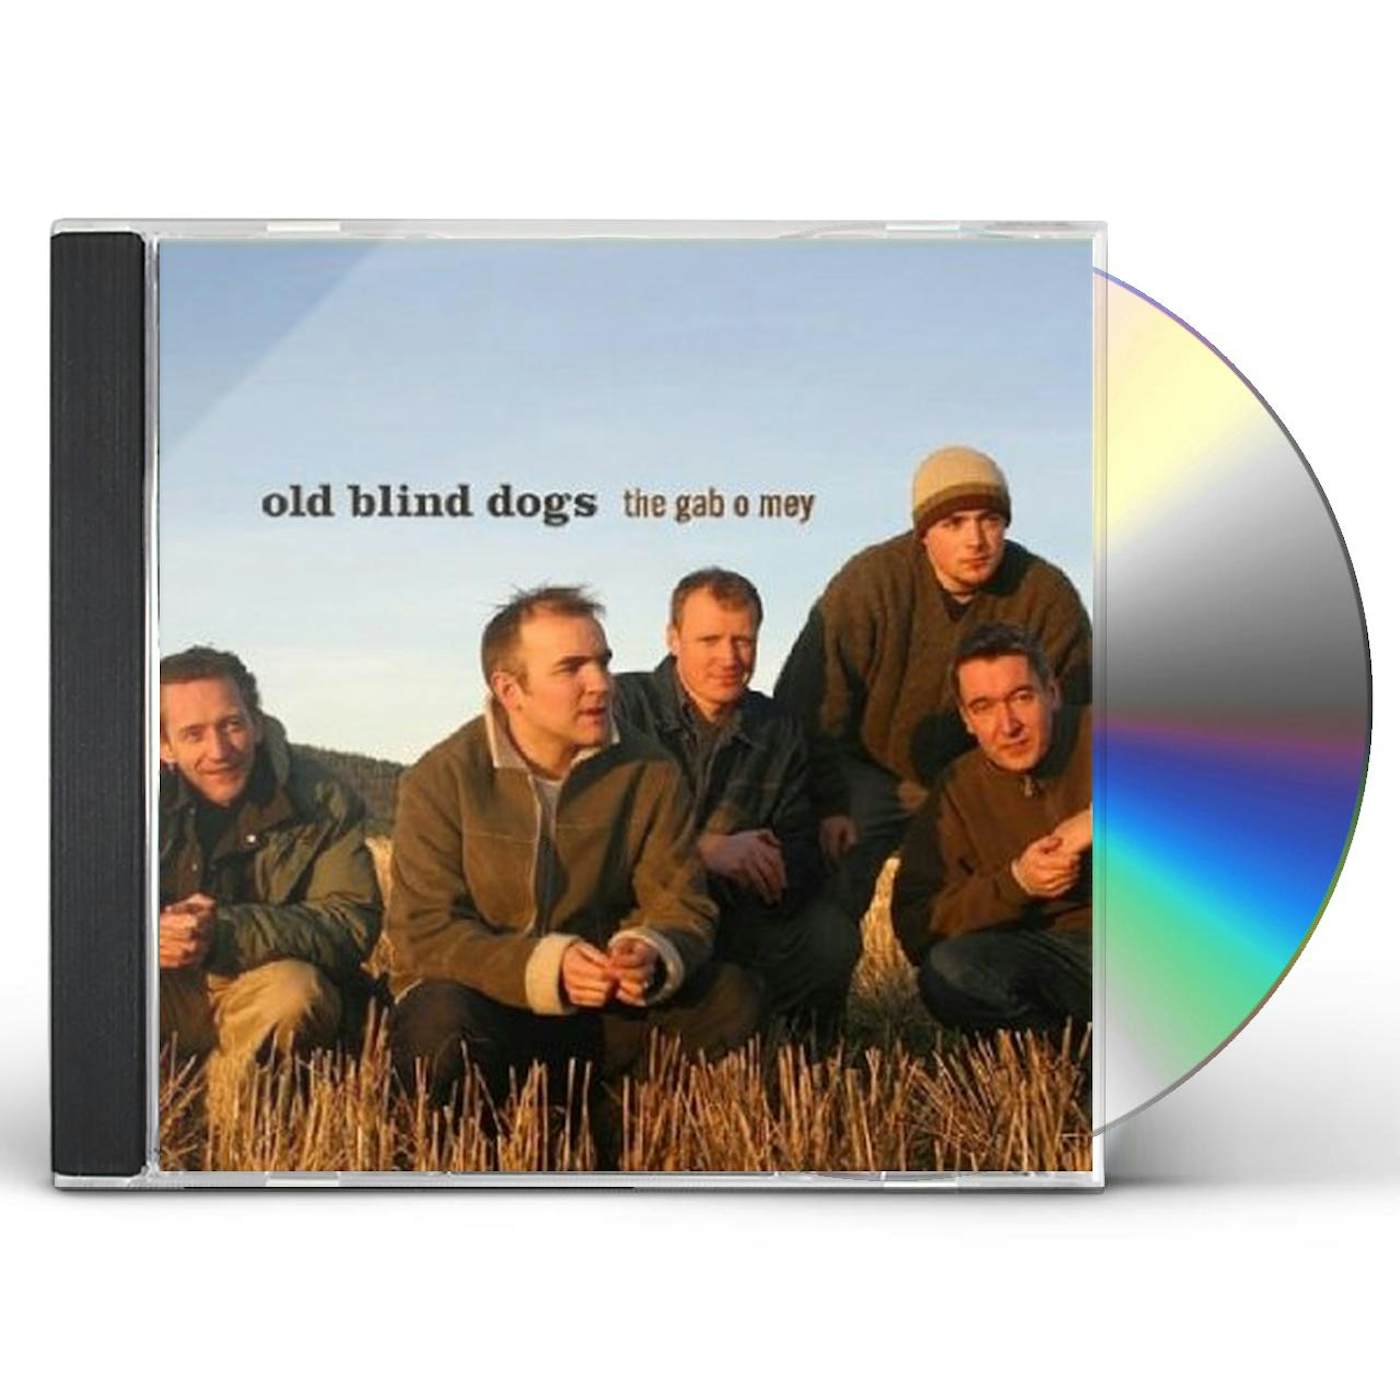 Old Blind Dogs GAB O MEY CD